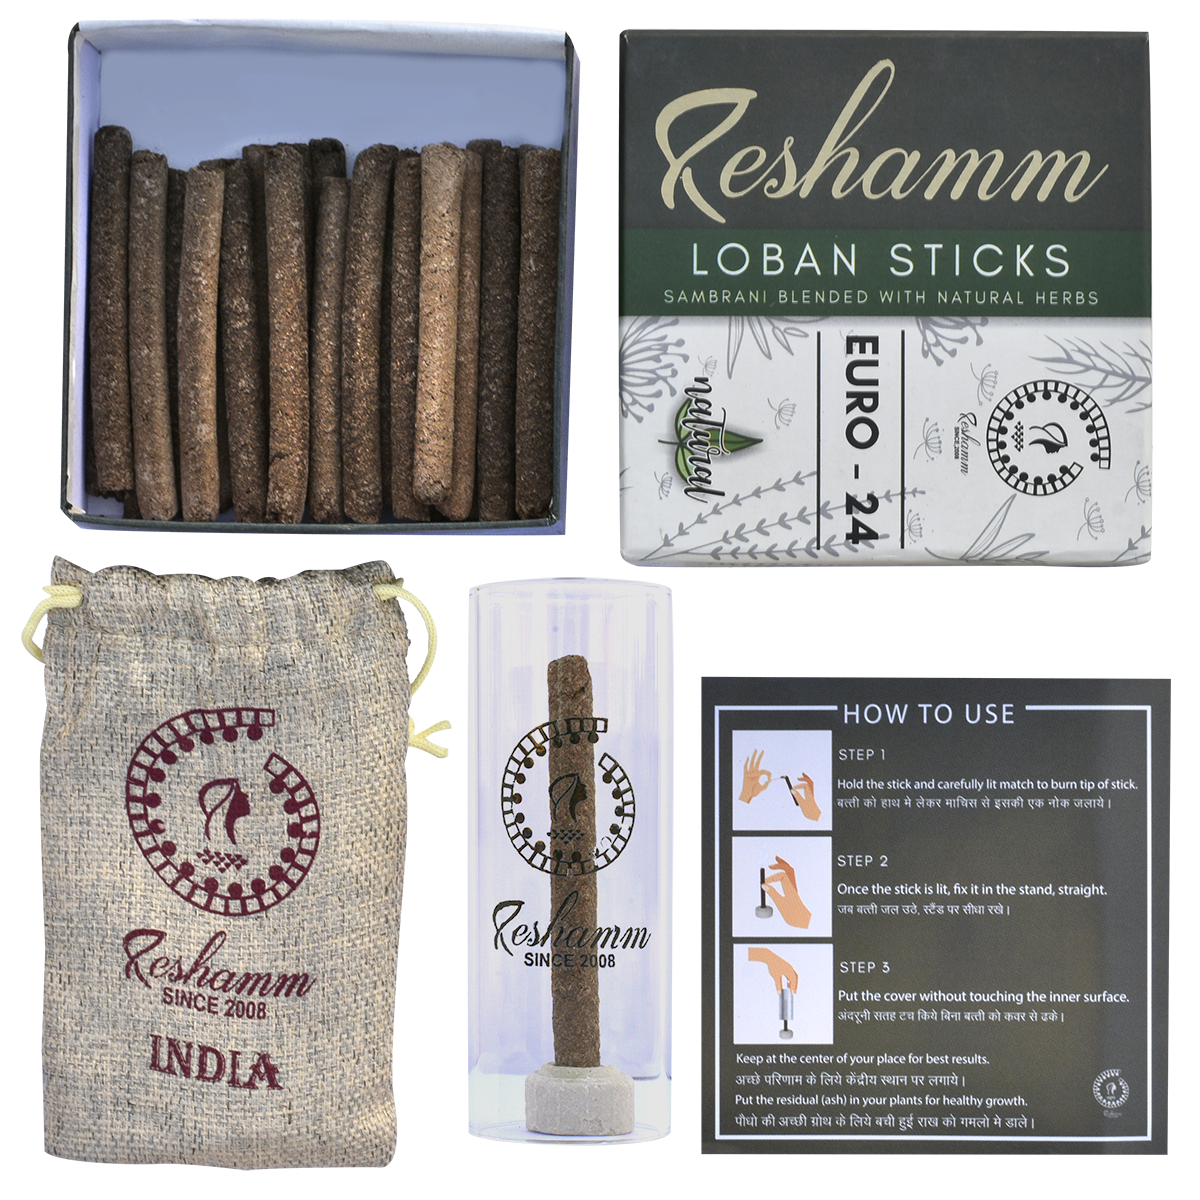 Natural & Herbal Havan Powder, & Loban Sticks; Made upto 97 Types Of Natural Herbs  (Pack Of 2,50g H.P)   (Pack of 2)